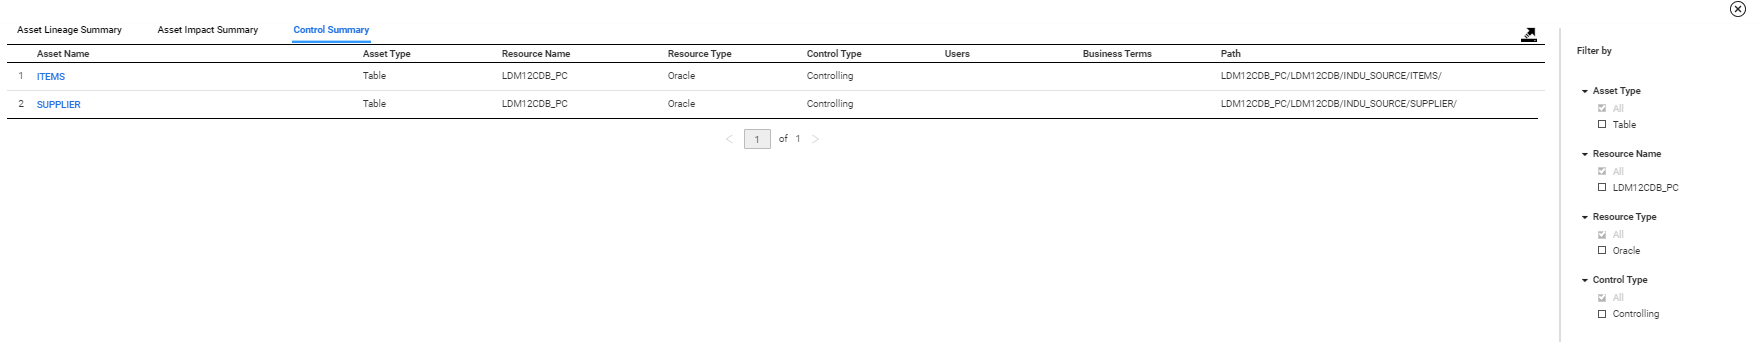 Image displays a sample Asset Control Summary tab.